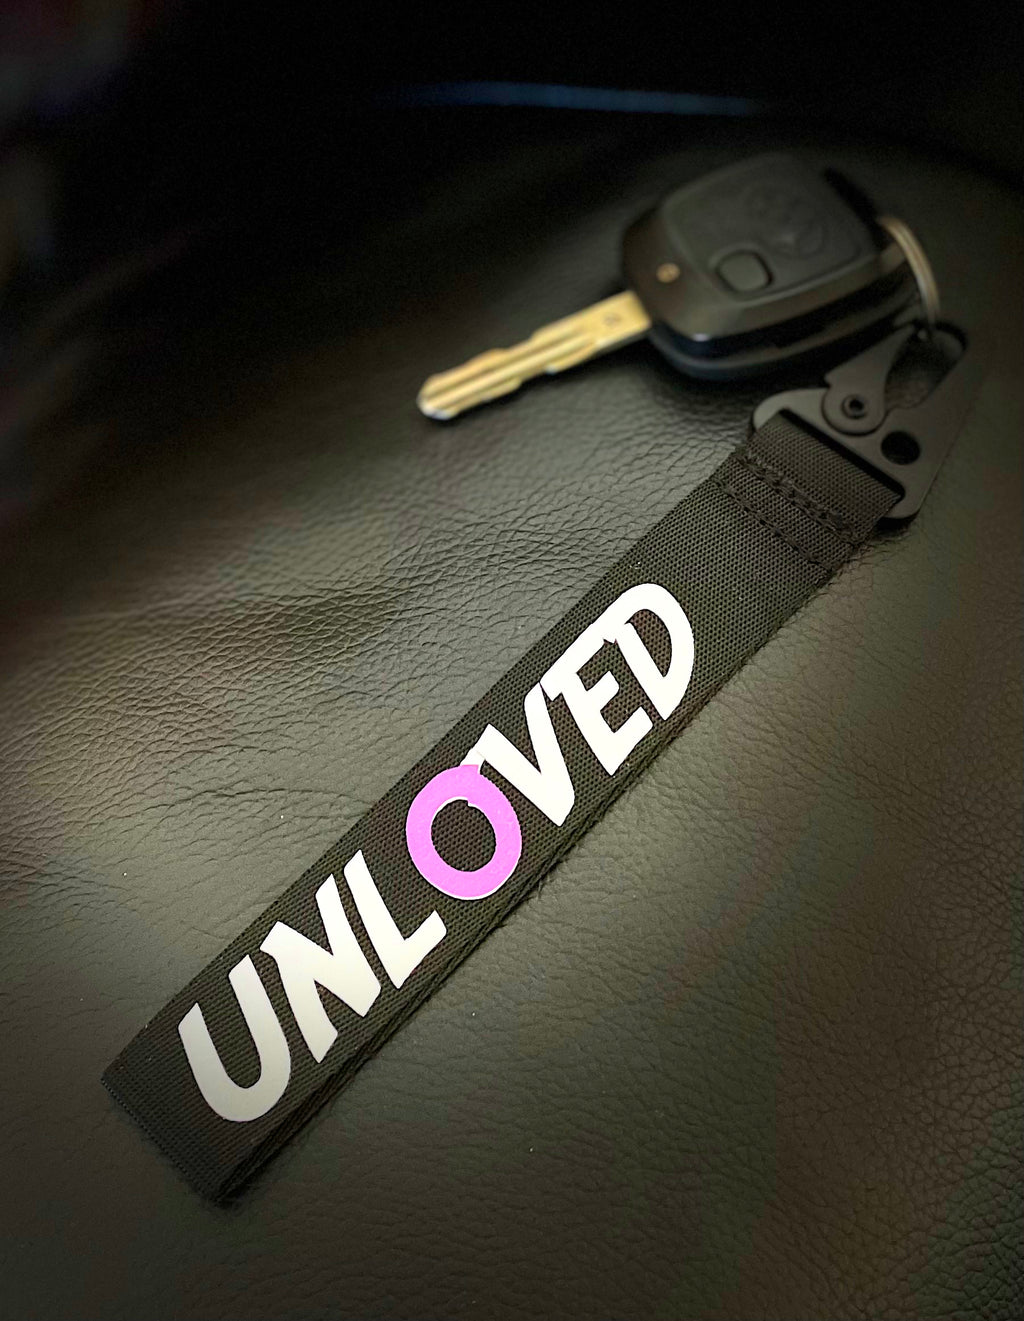 Unloved Key Clips